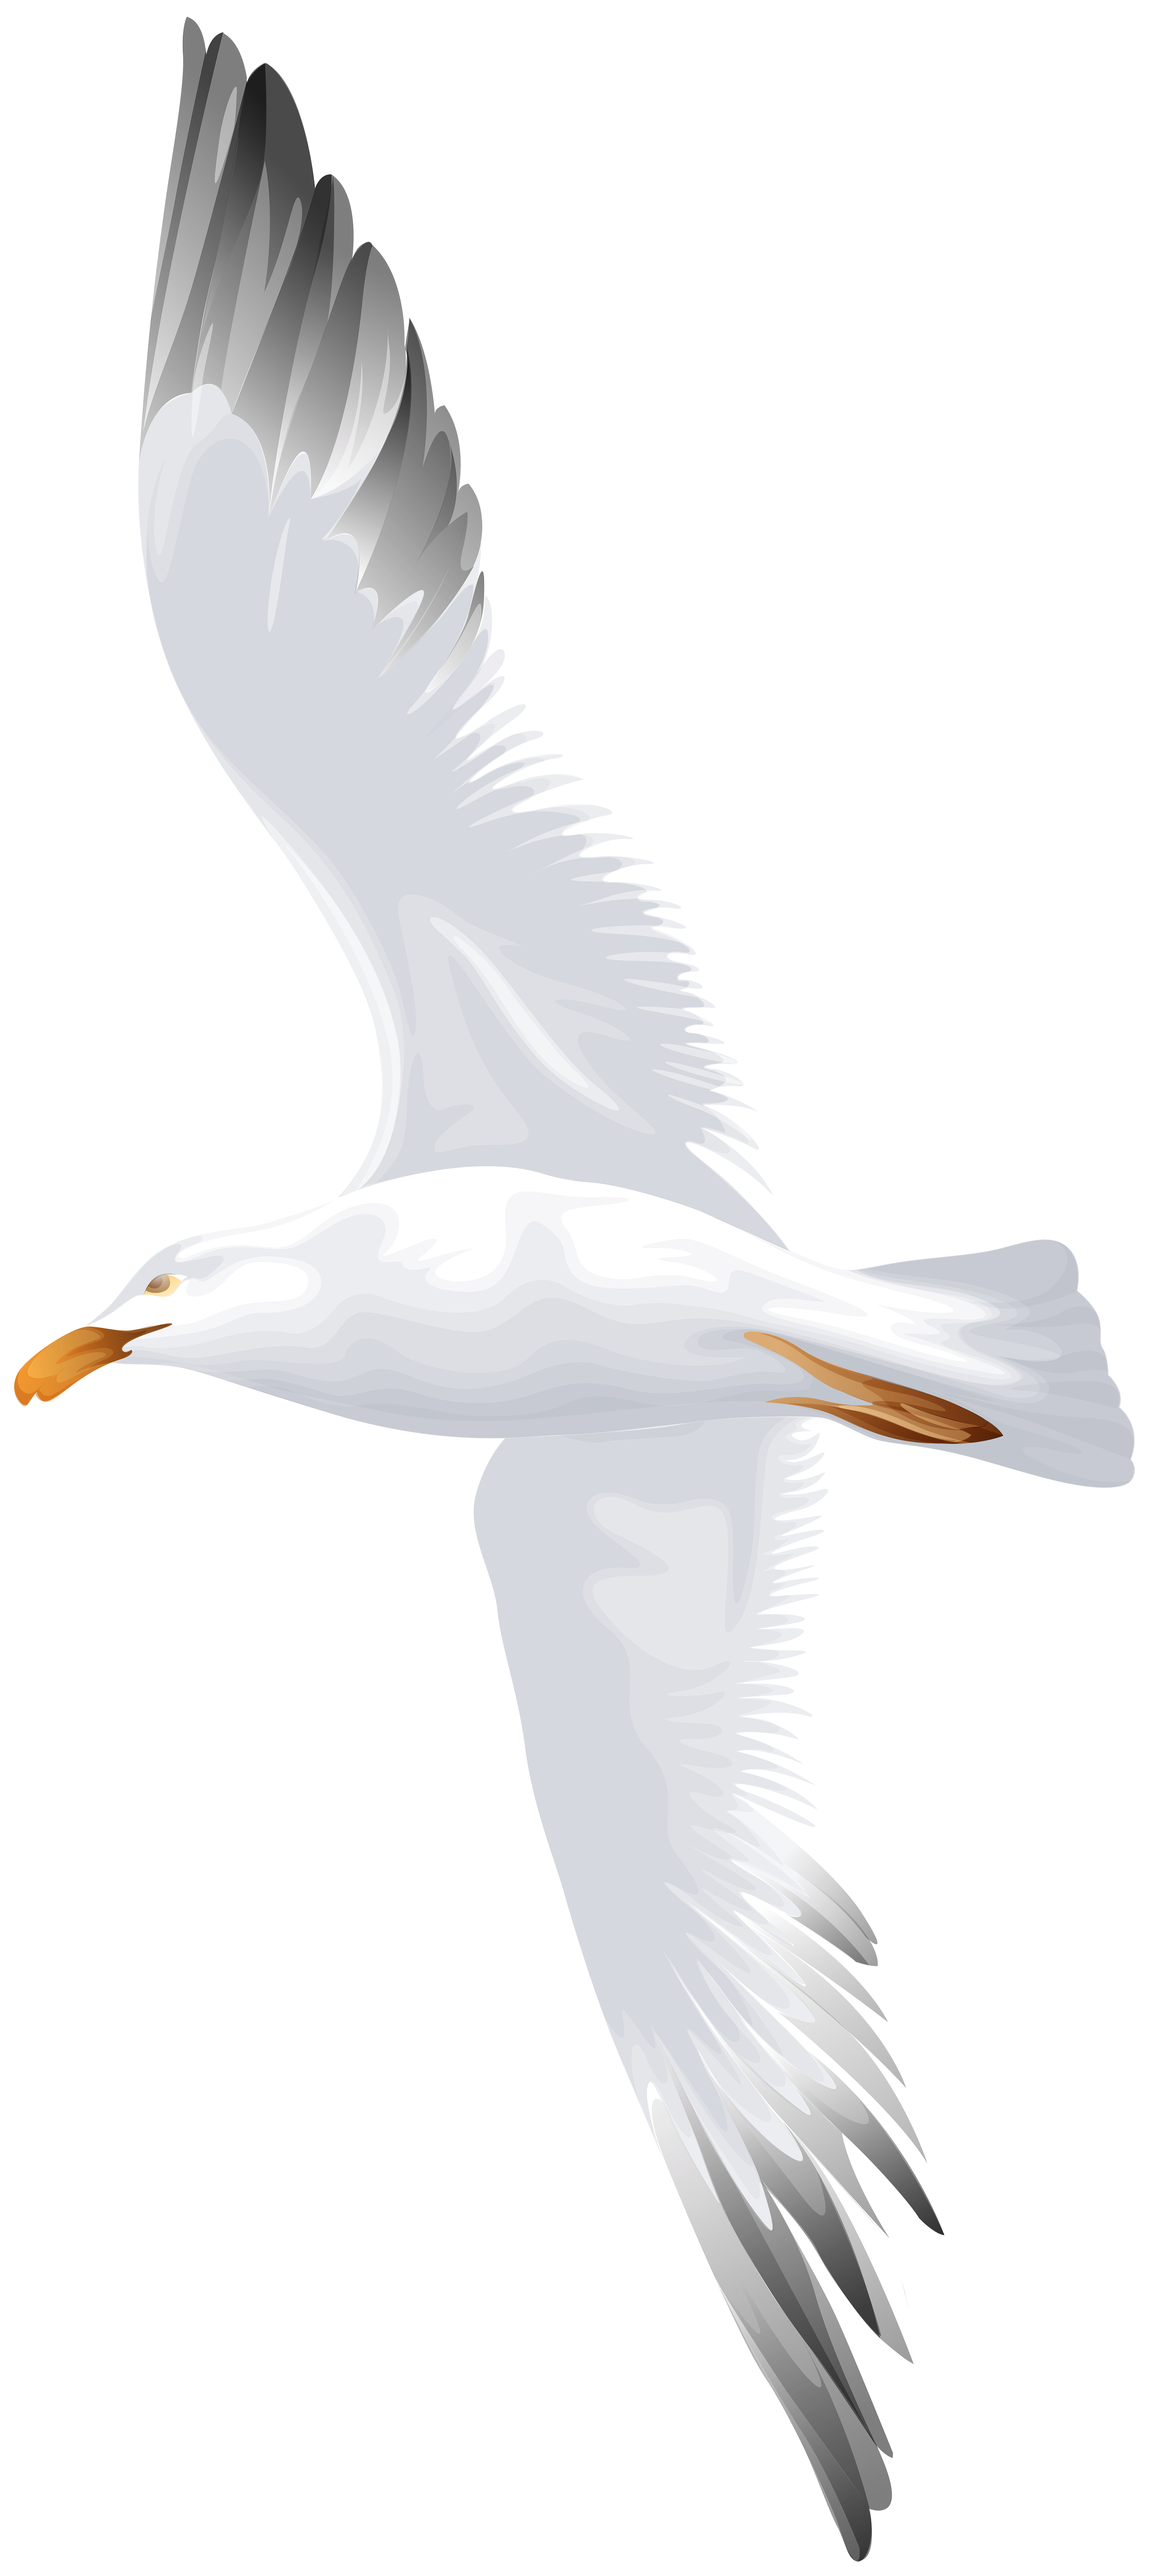 seagull clipart high resolution